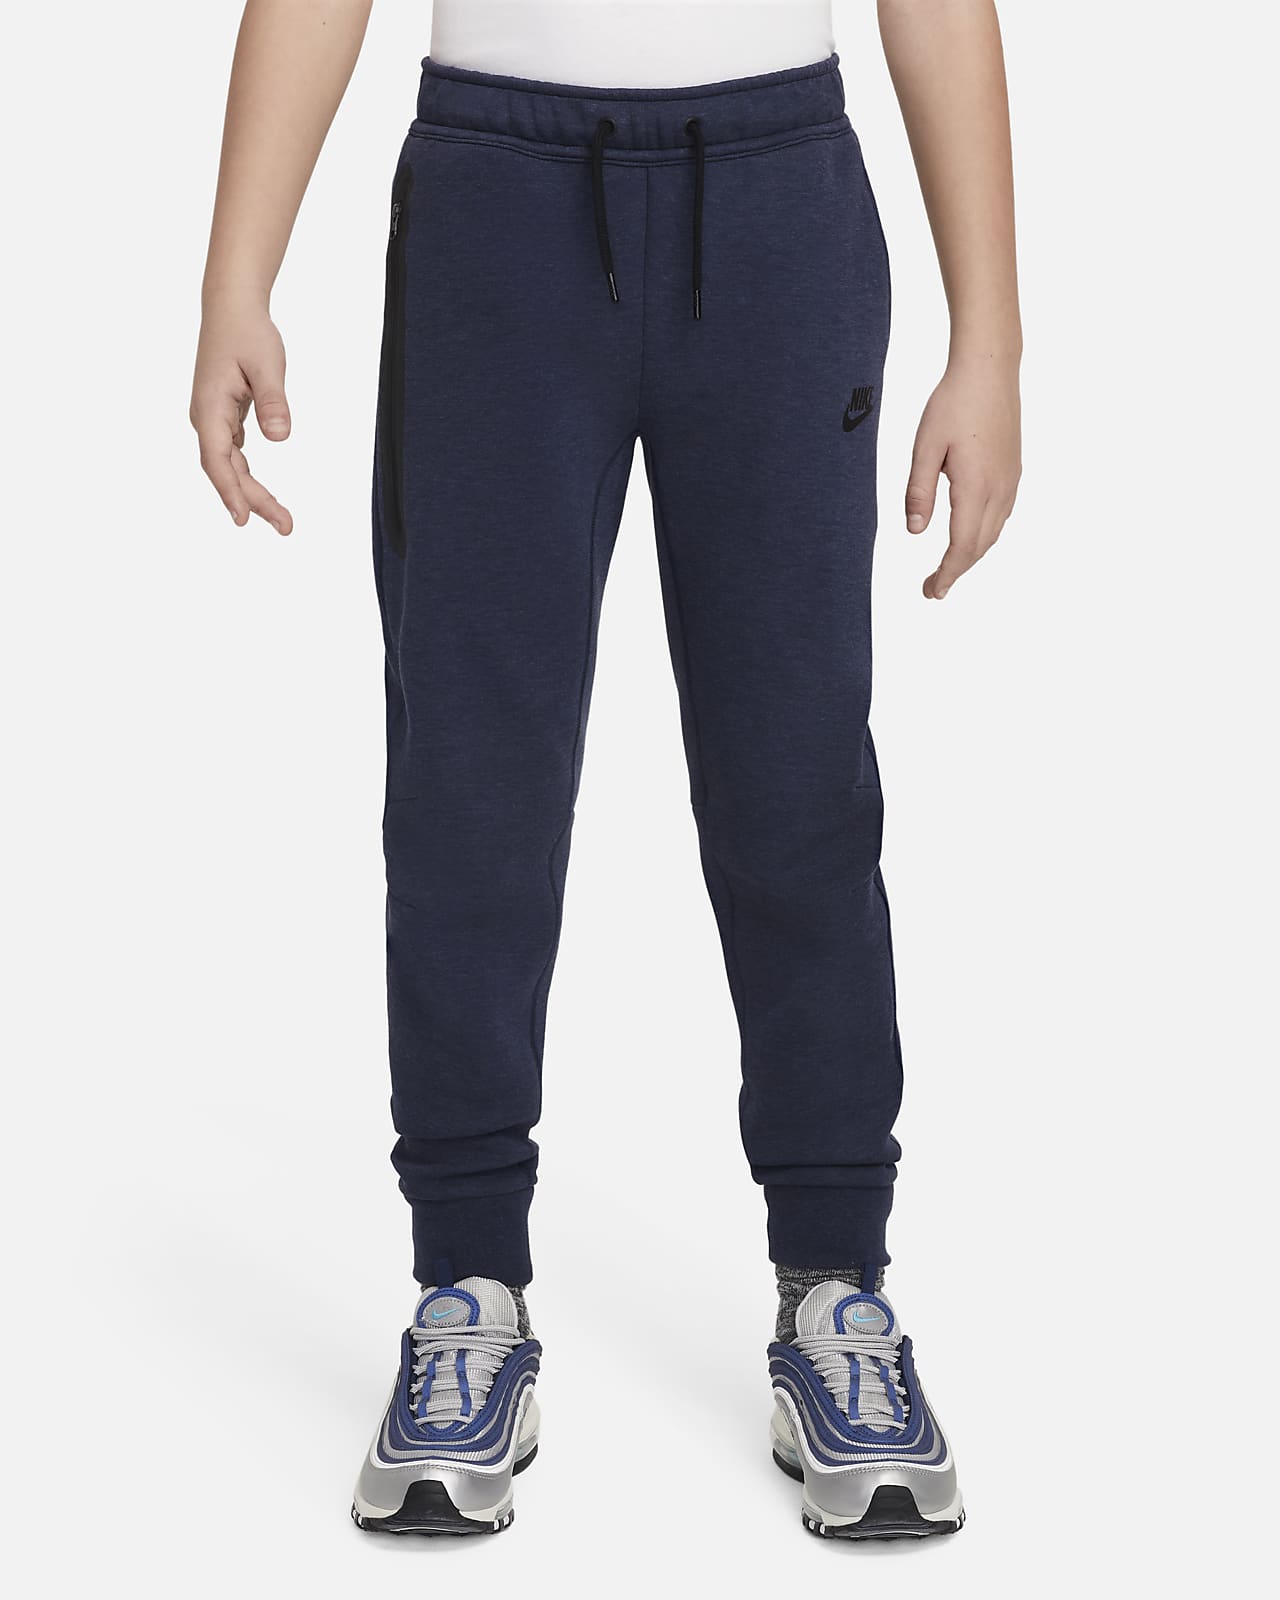 Nike Sportswear Tech Fleece Pants Sz 2XL Dark Grey Heather Black